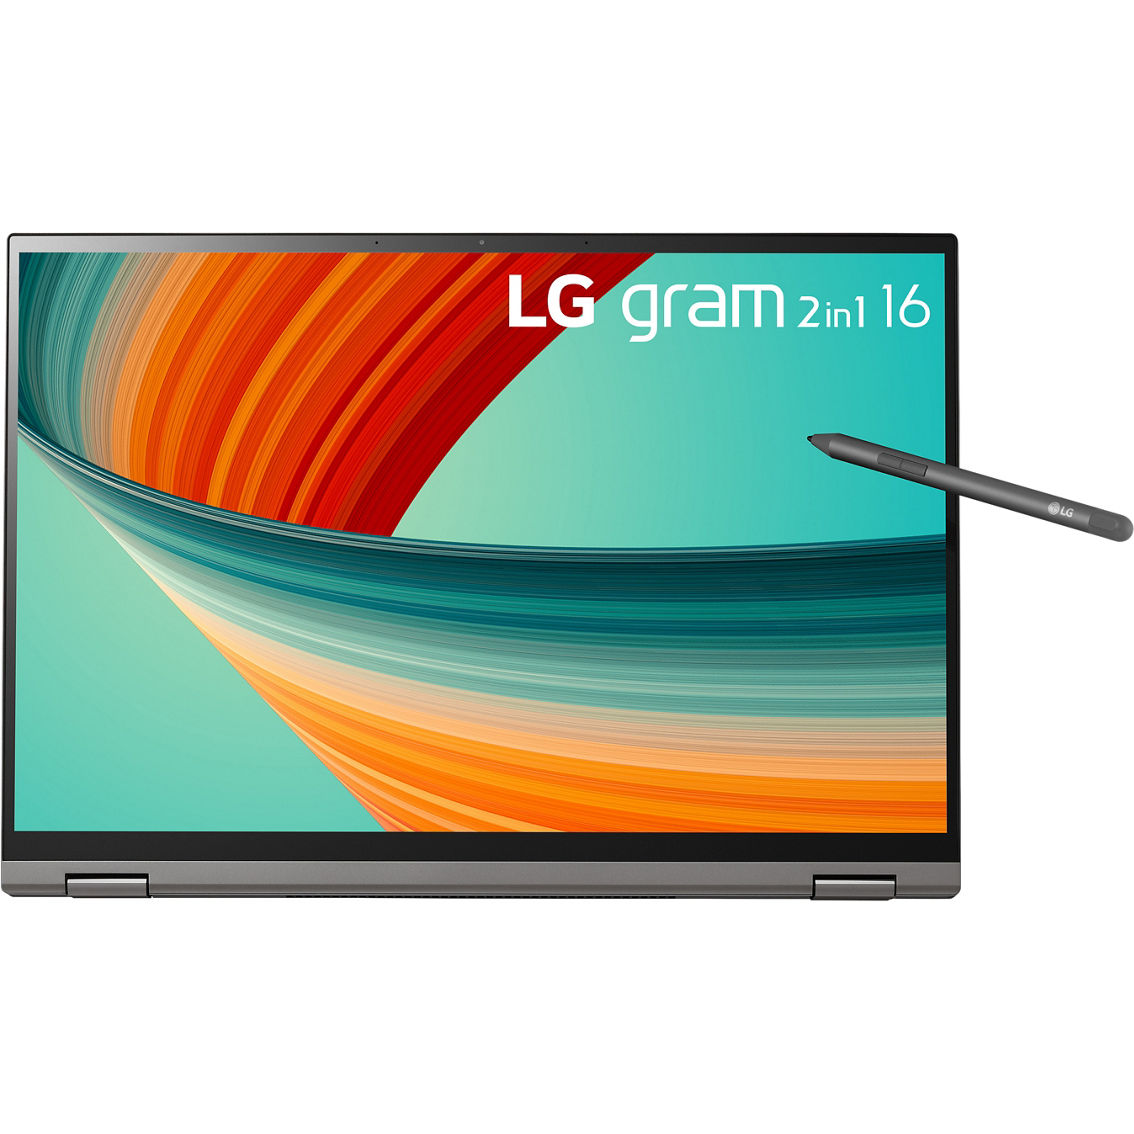 LG gram 16 in. Intel Evo Core i7 2.2GHz 16GB RAM 2TB SSD 2-in-1 Laptop - Image 9 of 9